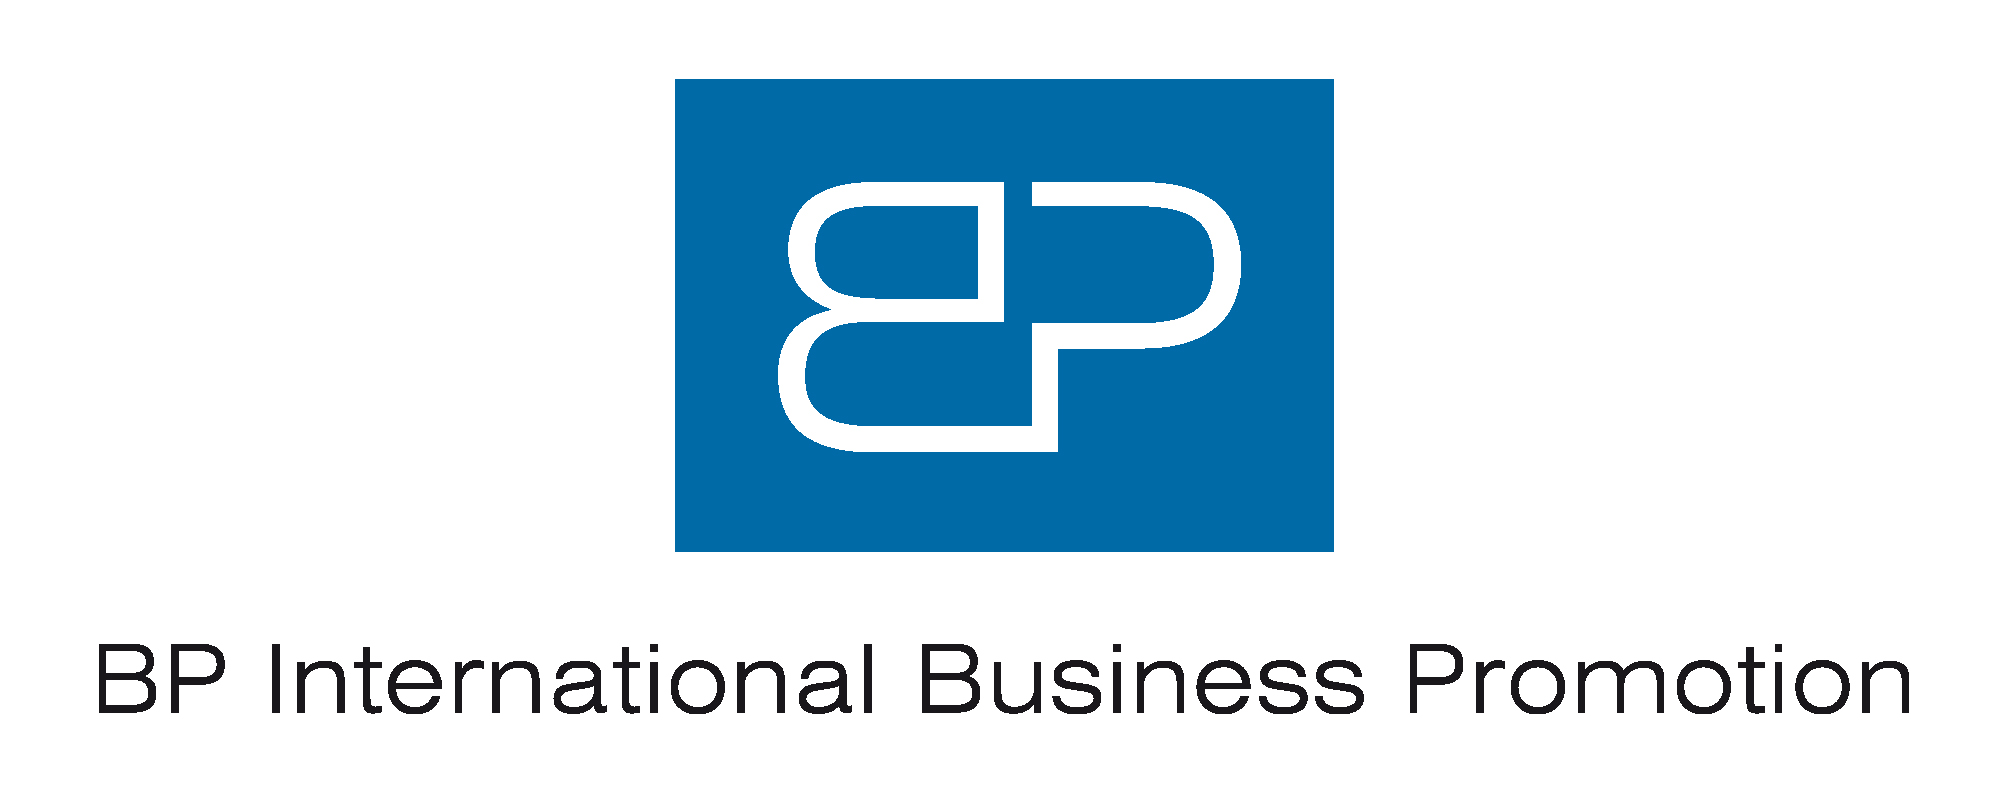 BPIBP logo